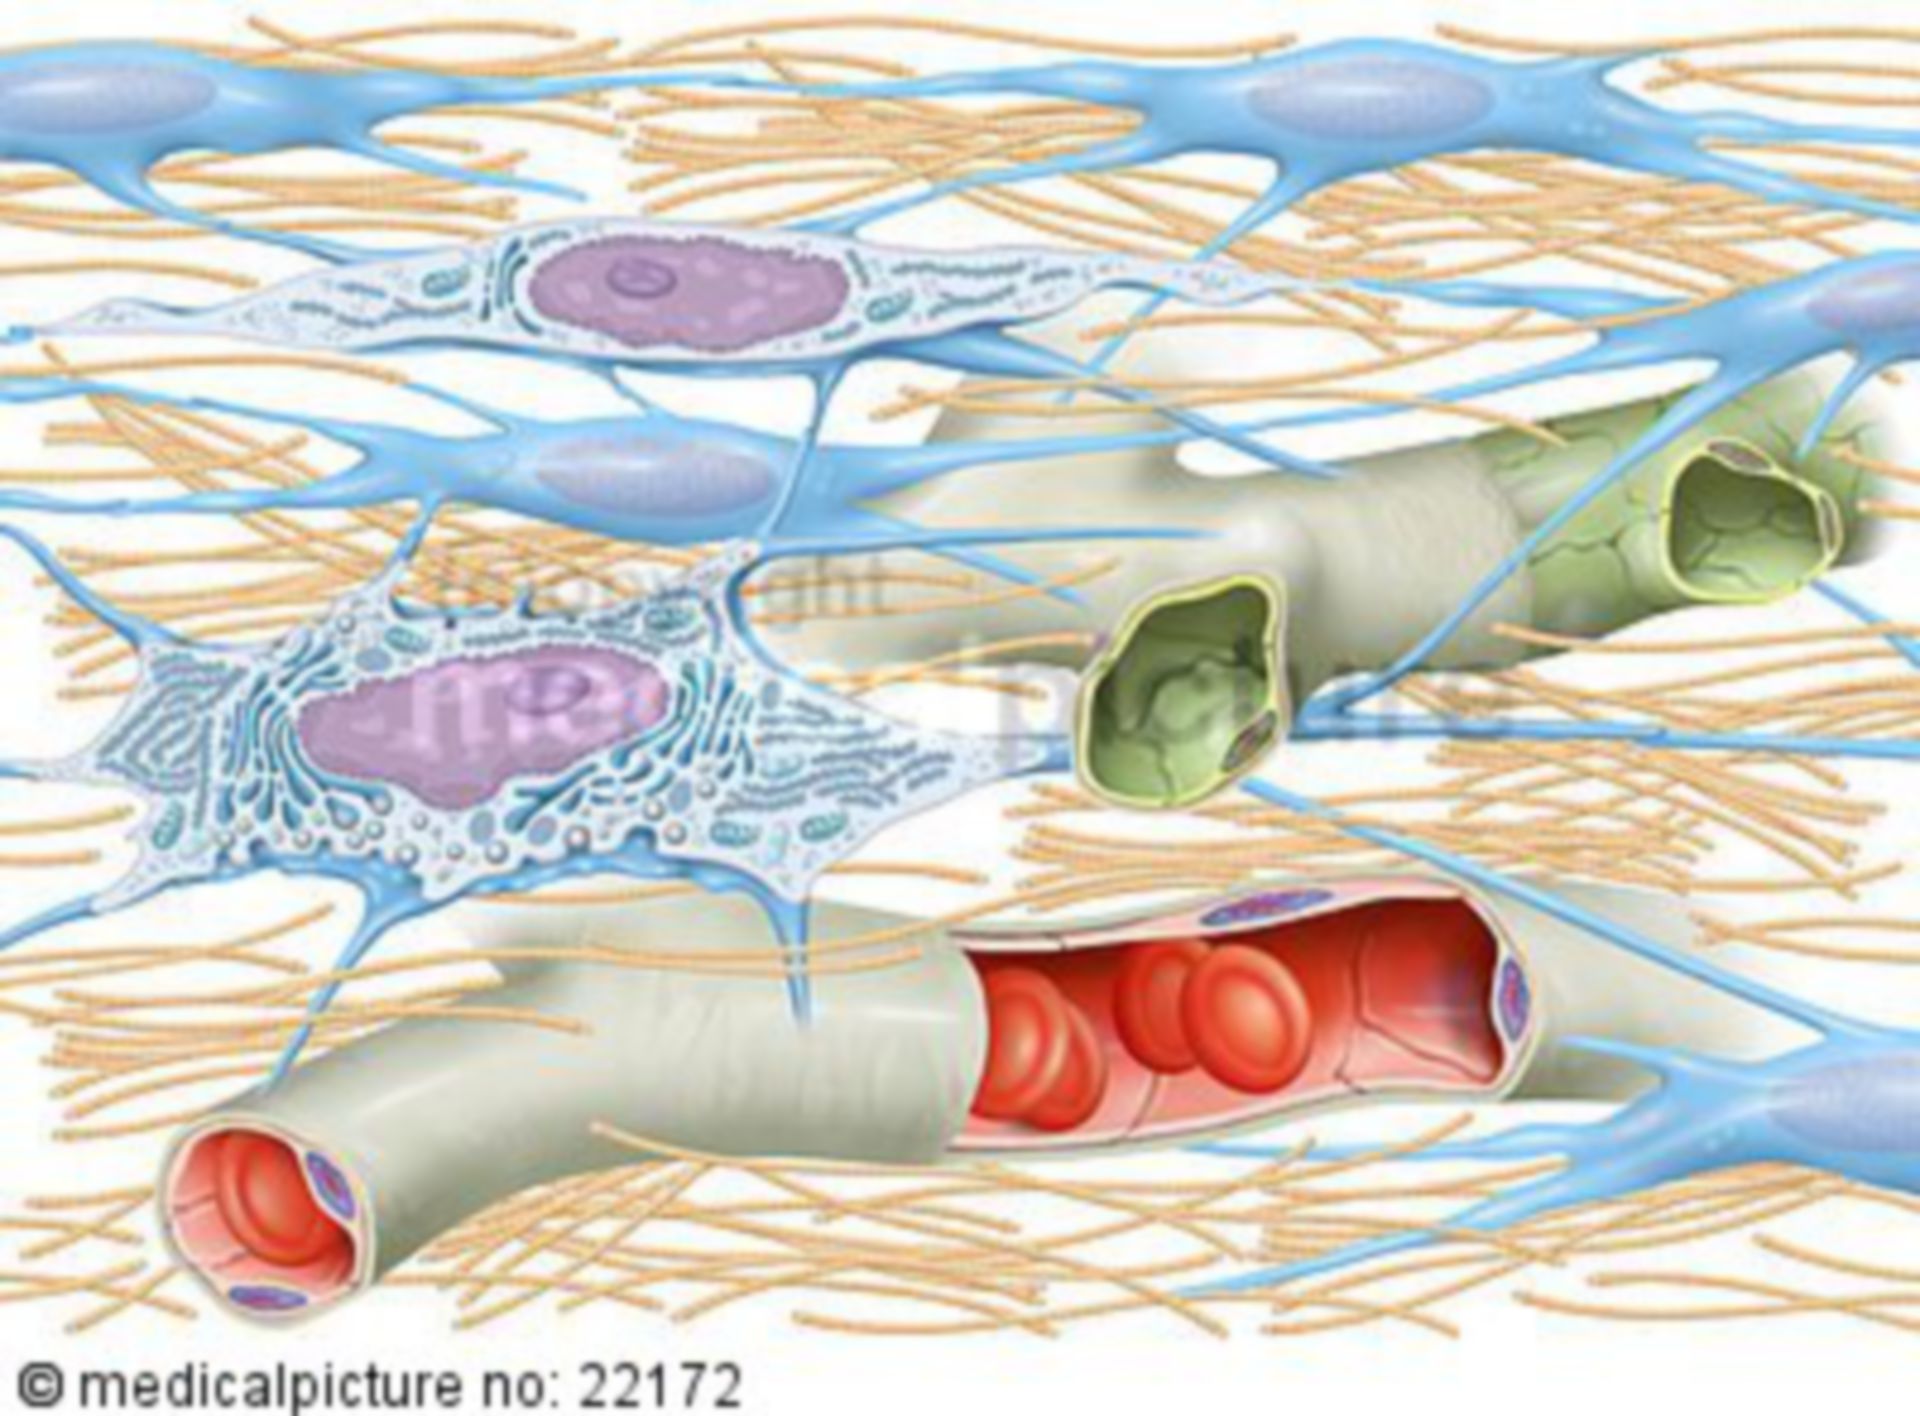 Collagen fibers in connective tissue